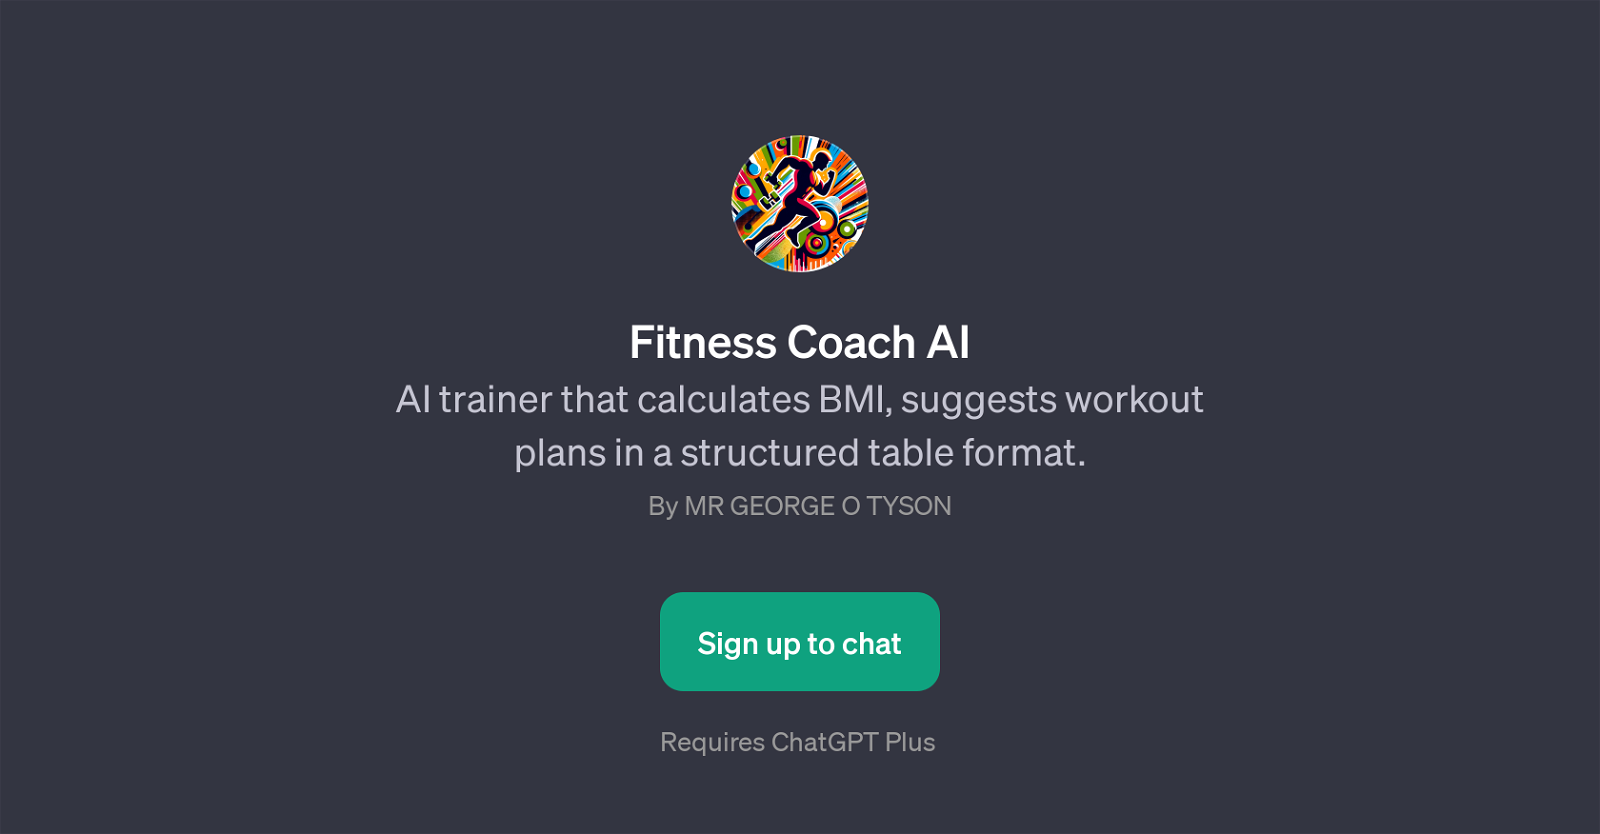 Fitness Coach AI website